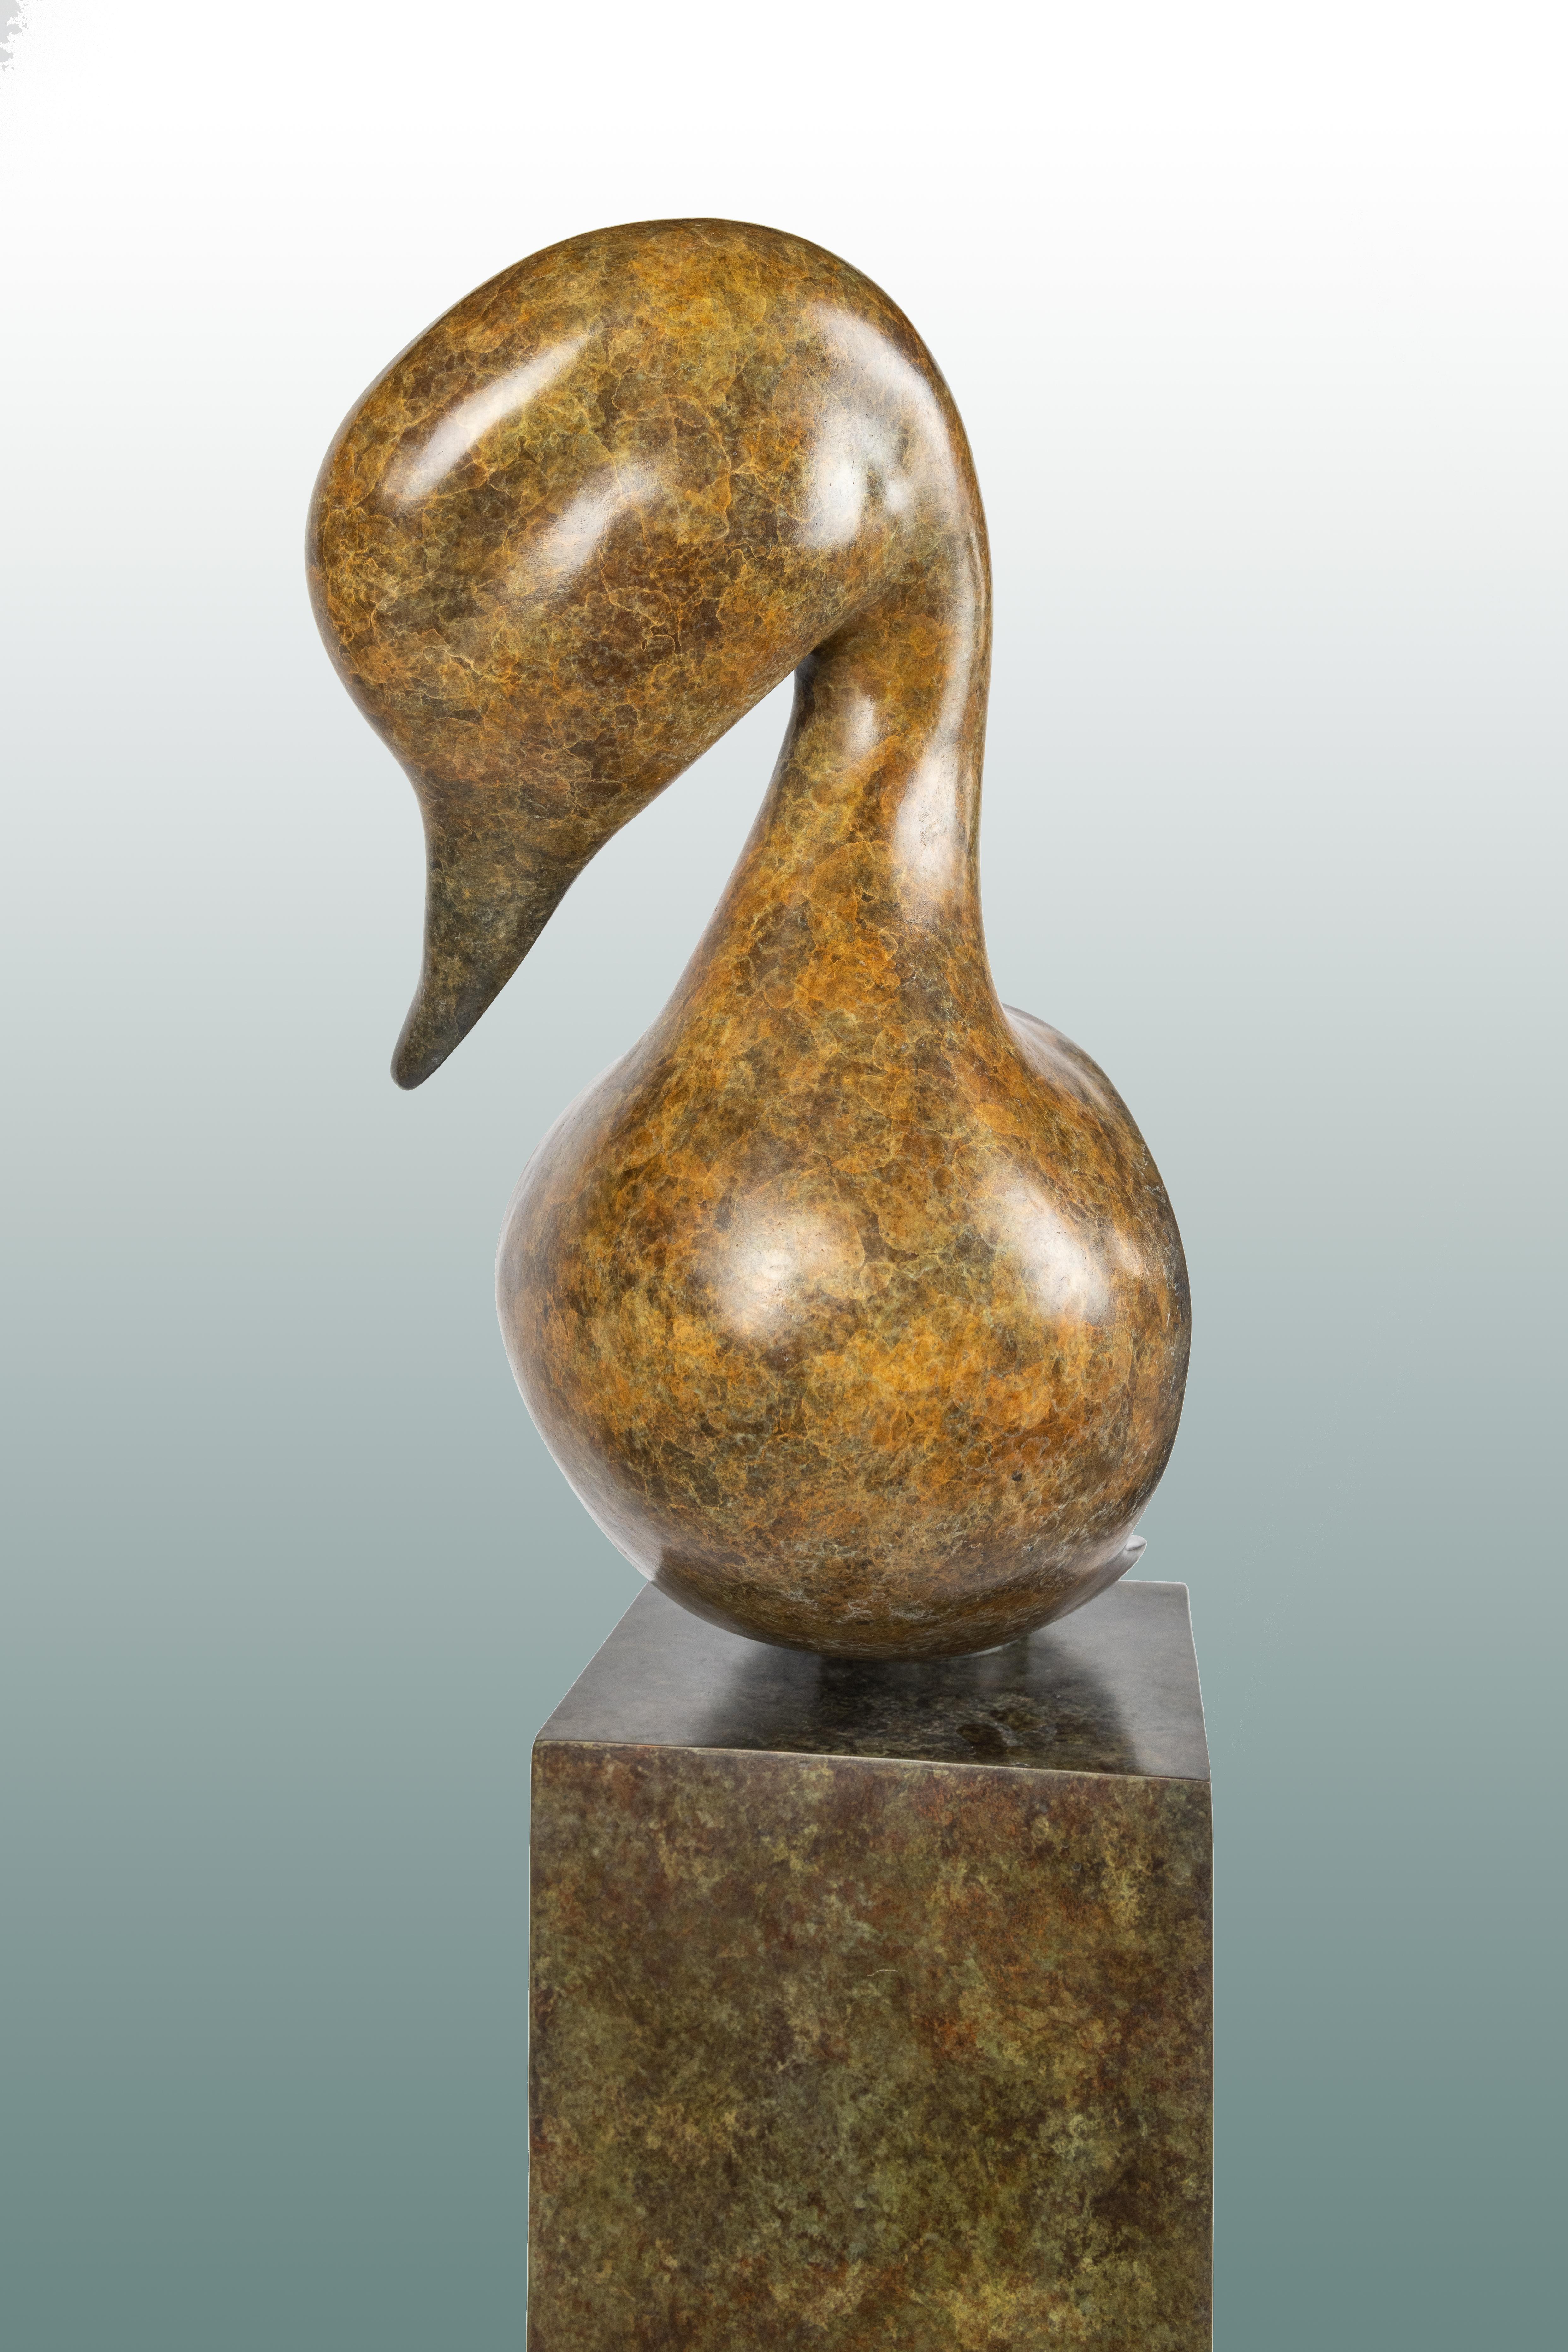 Grande sculpture contemporaine de faune en bronze « Tête de pique » de Richard Smith  - Contemporain Sculpture par Richard Smith b.1955